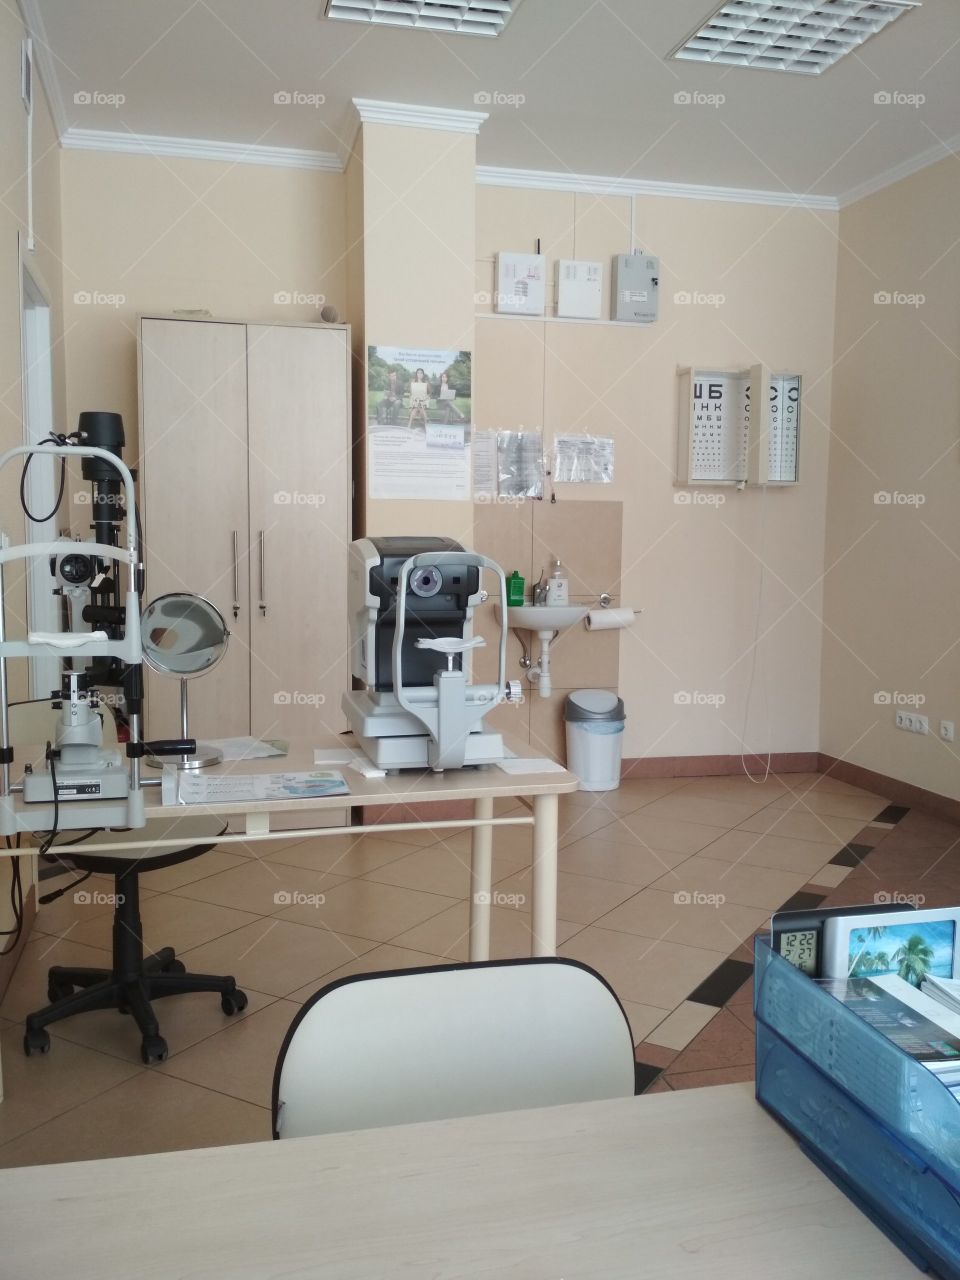 Ophthalmology room